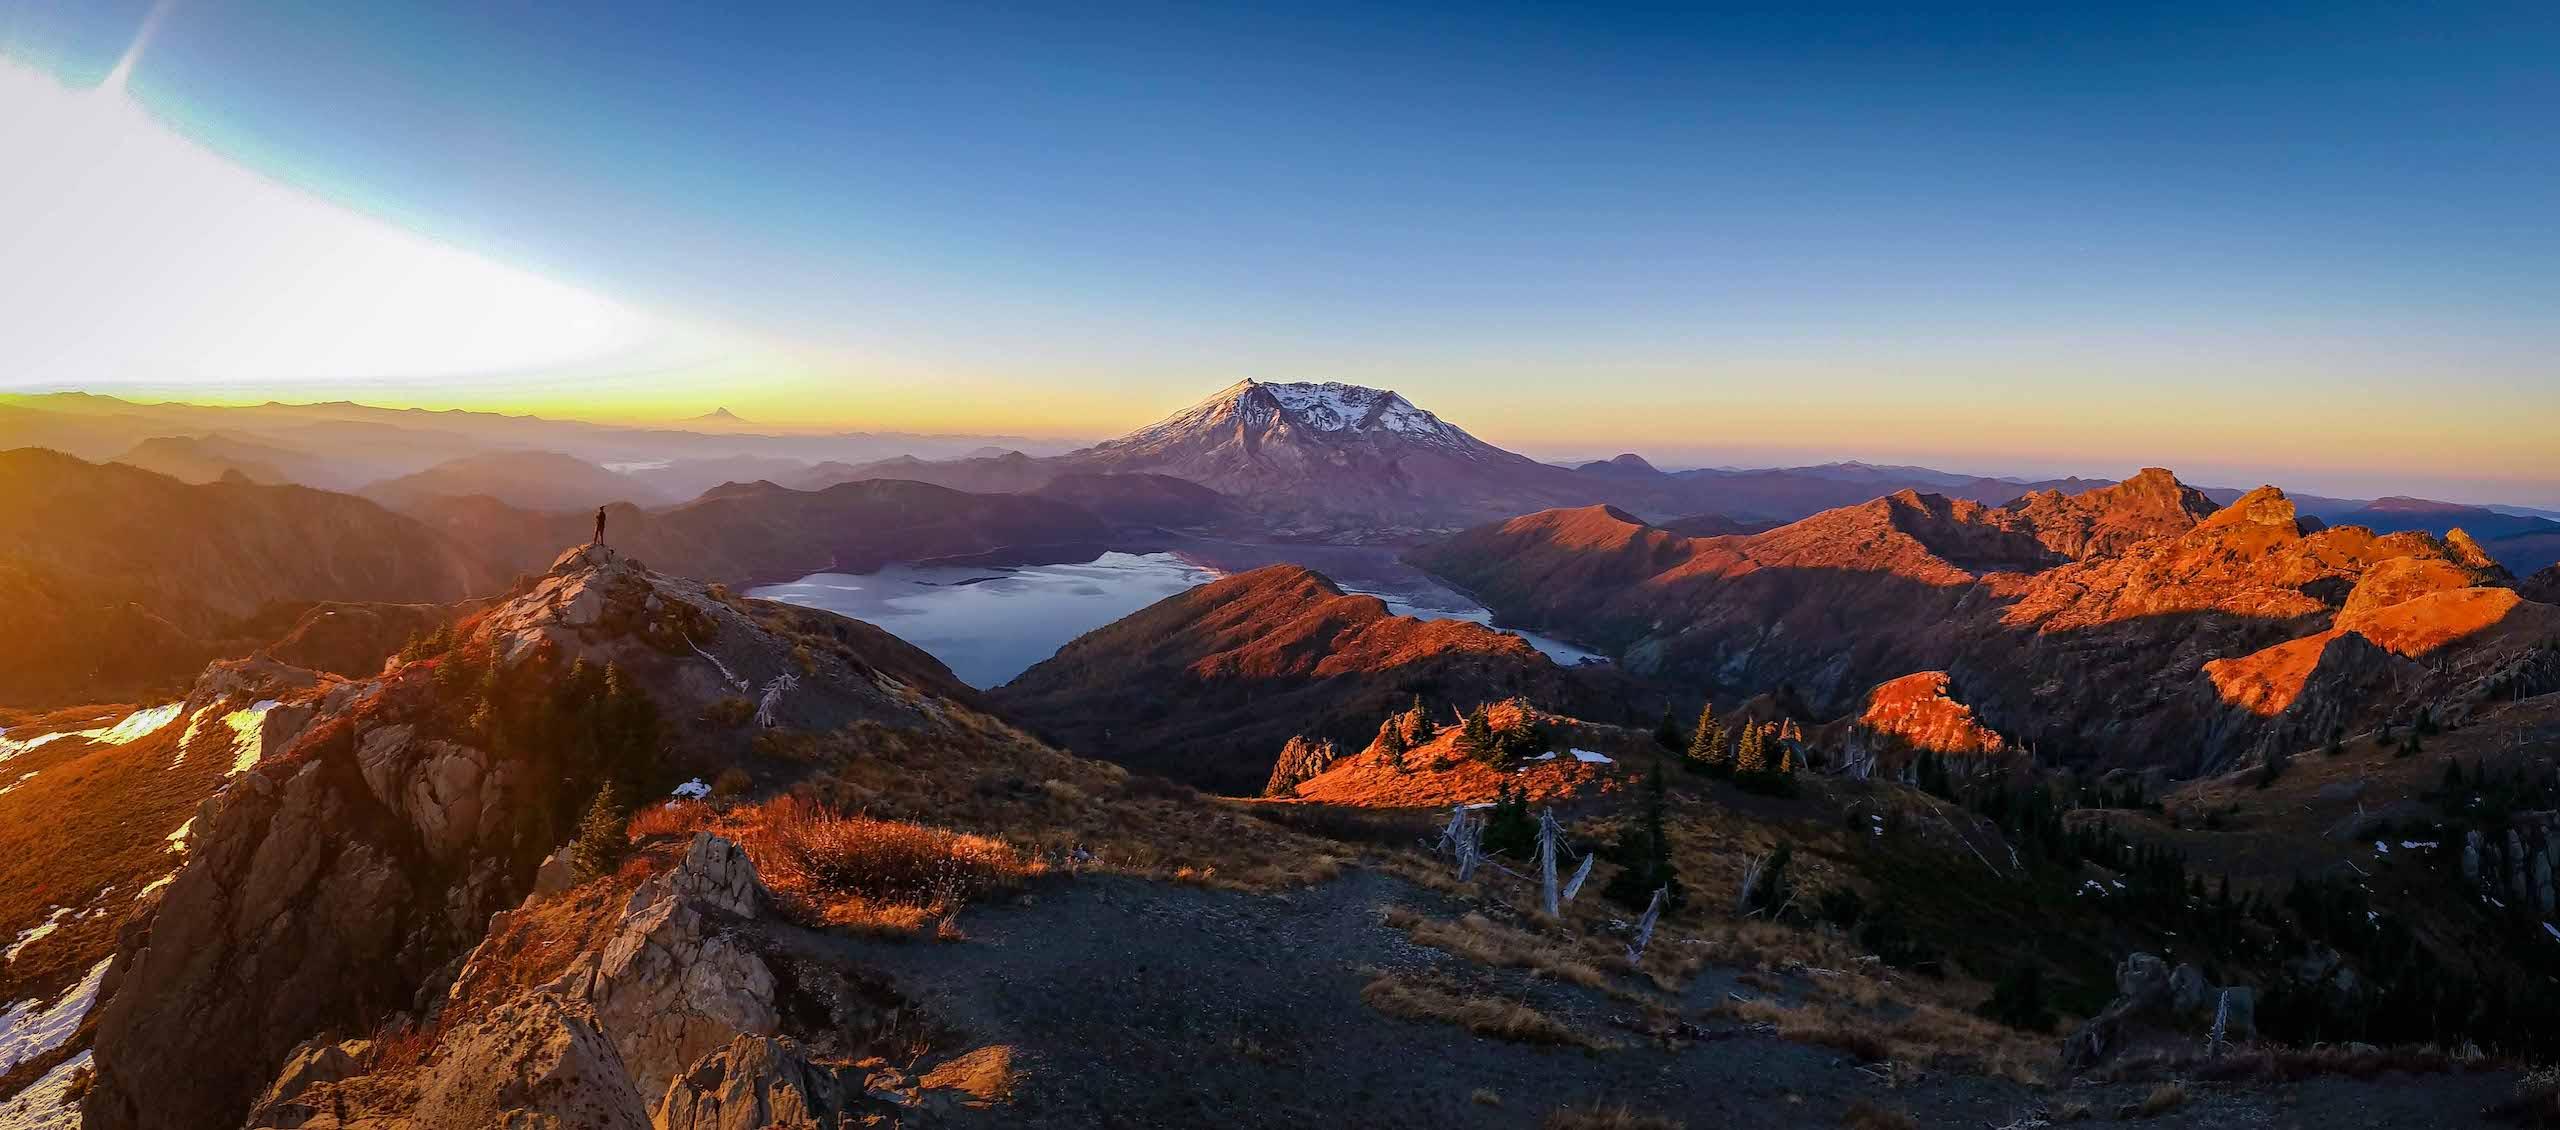 Sunrise at Mt St Helens. Photo by Brock Dallman